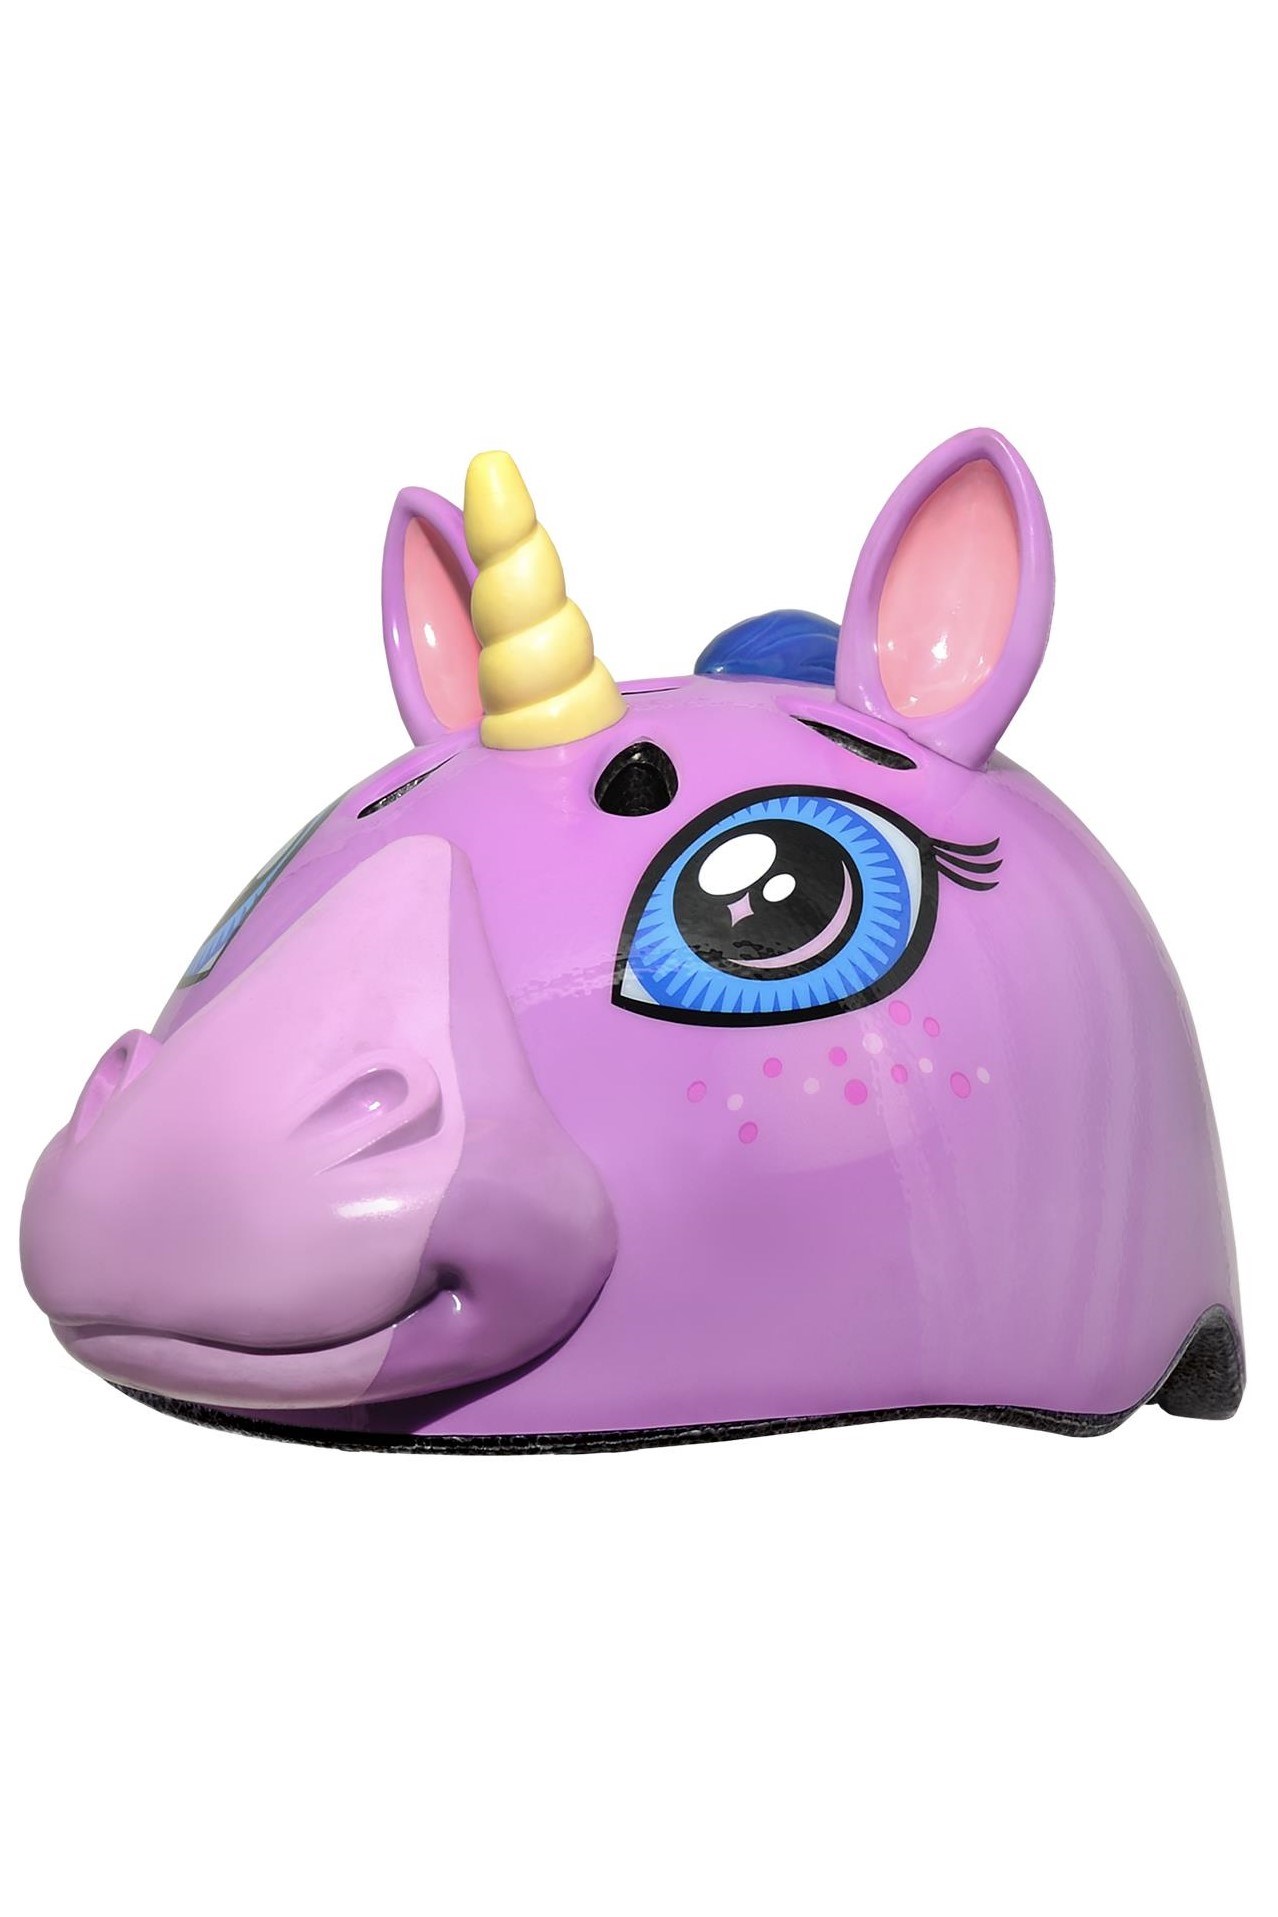 Unicorn Pink Raskullz Toddler Helmet (3+ Years) -